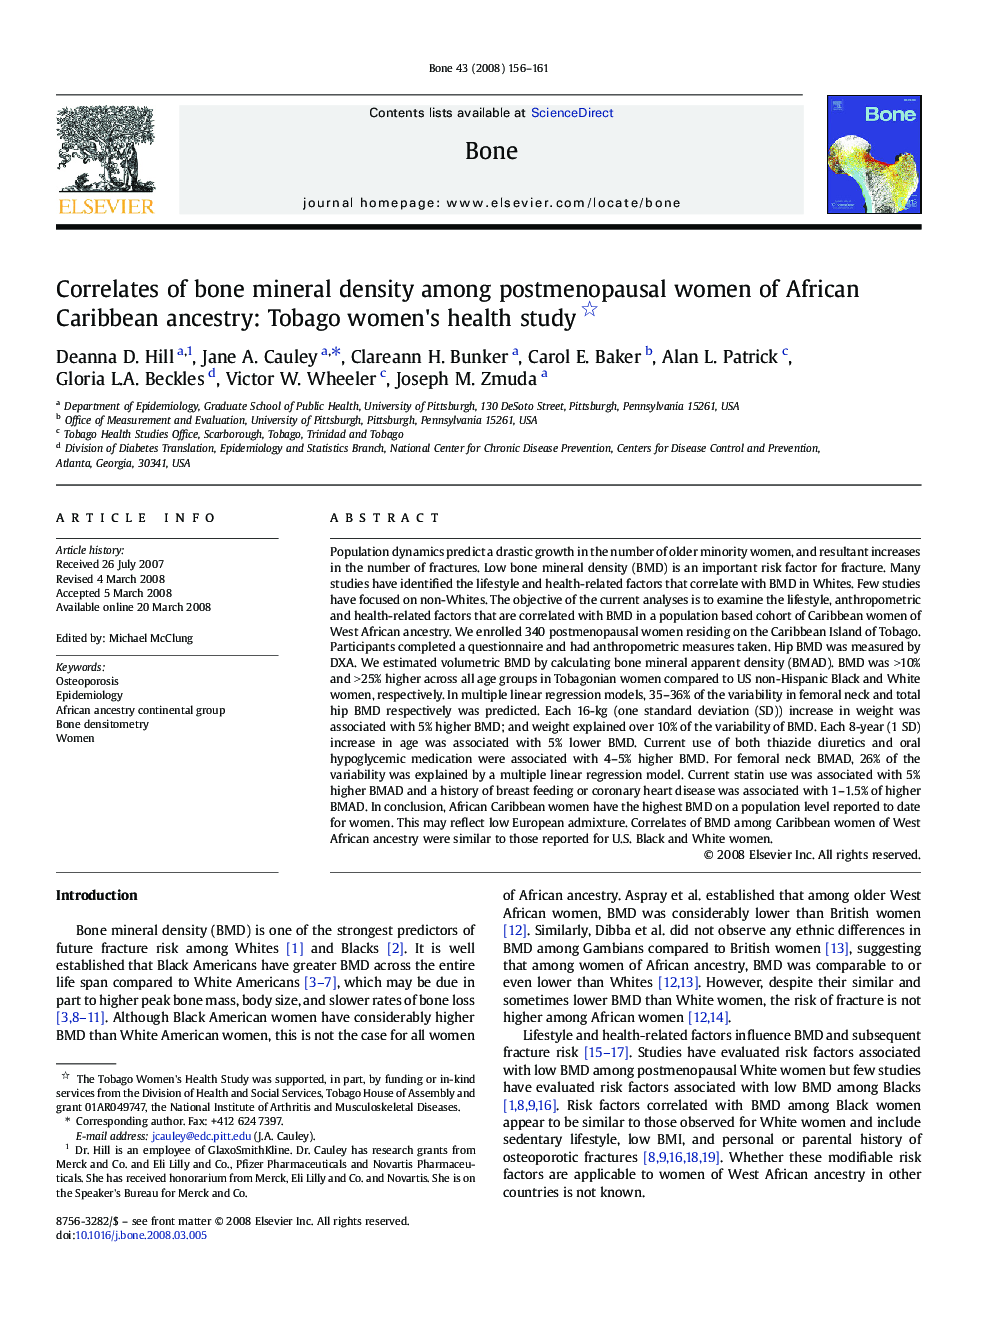 Correlates of bone mineral density among postmenopausal women of African Caribbean ancestry: Tobago women's health study